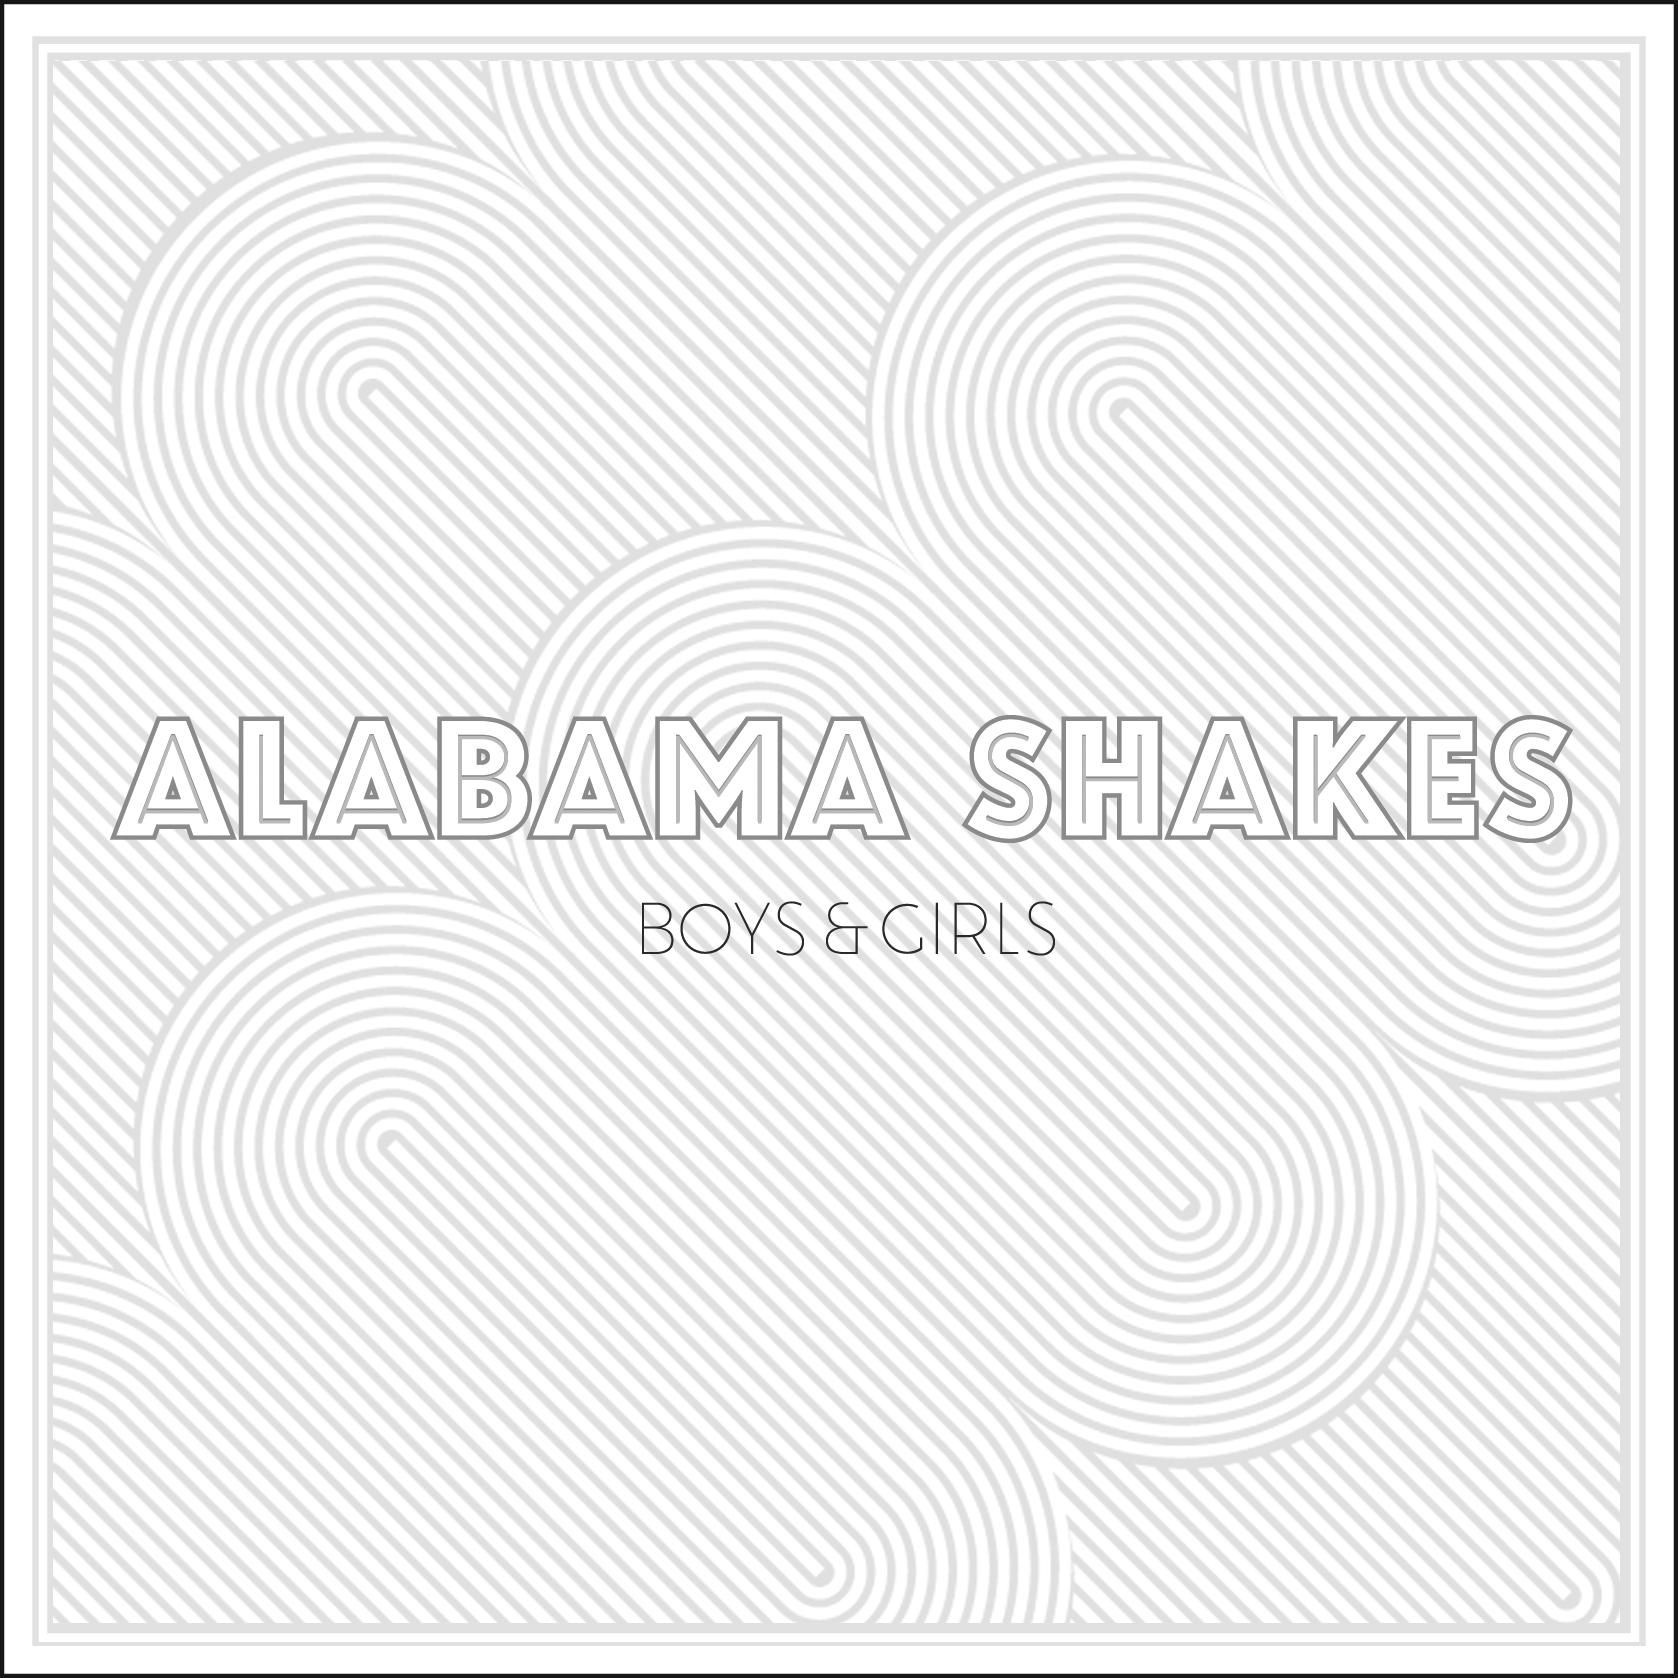 Alabama Shakes Announce Summer North American Headline Tour